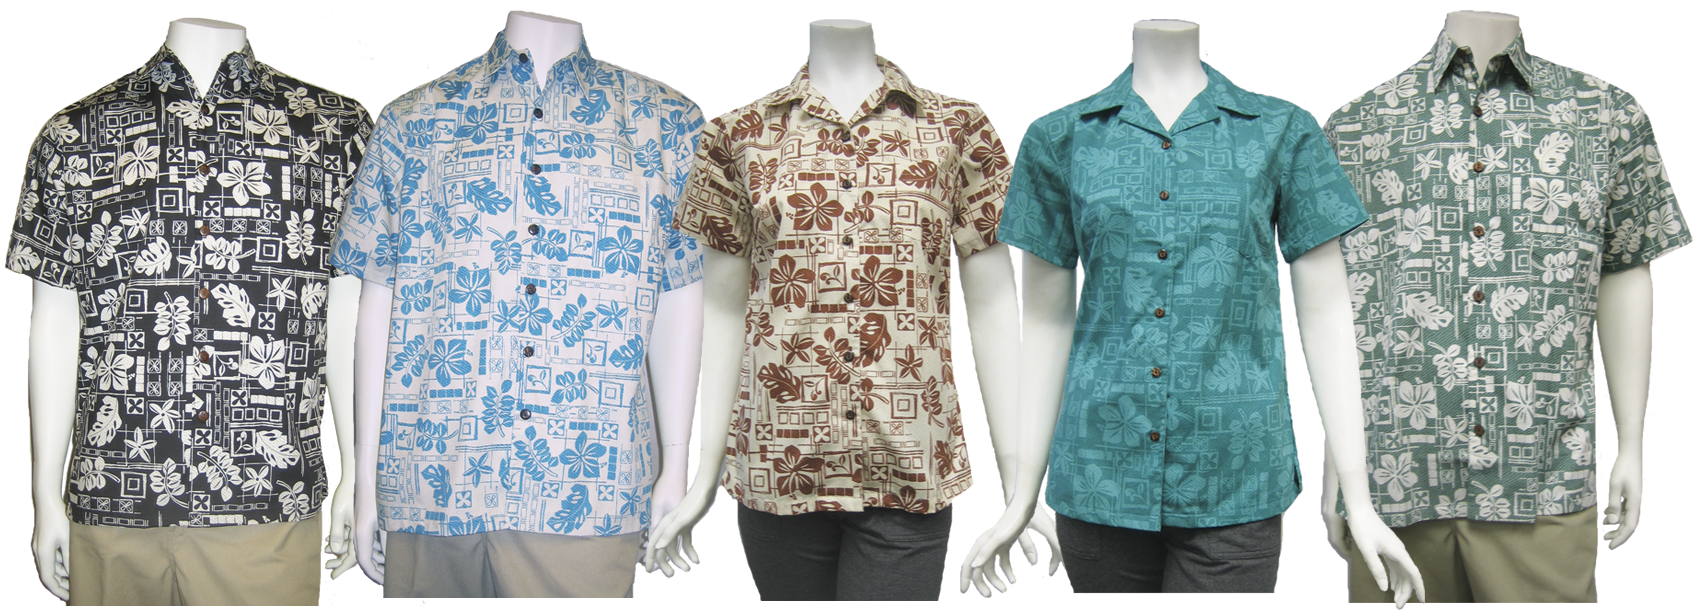 Uniforms | Hilo Hattie The Store Of Hawaii